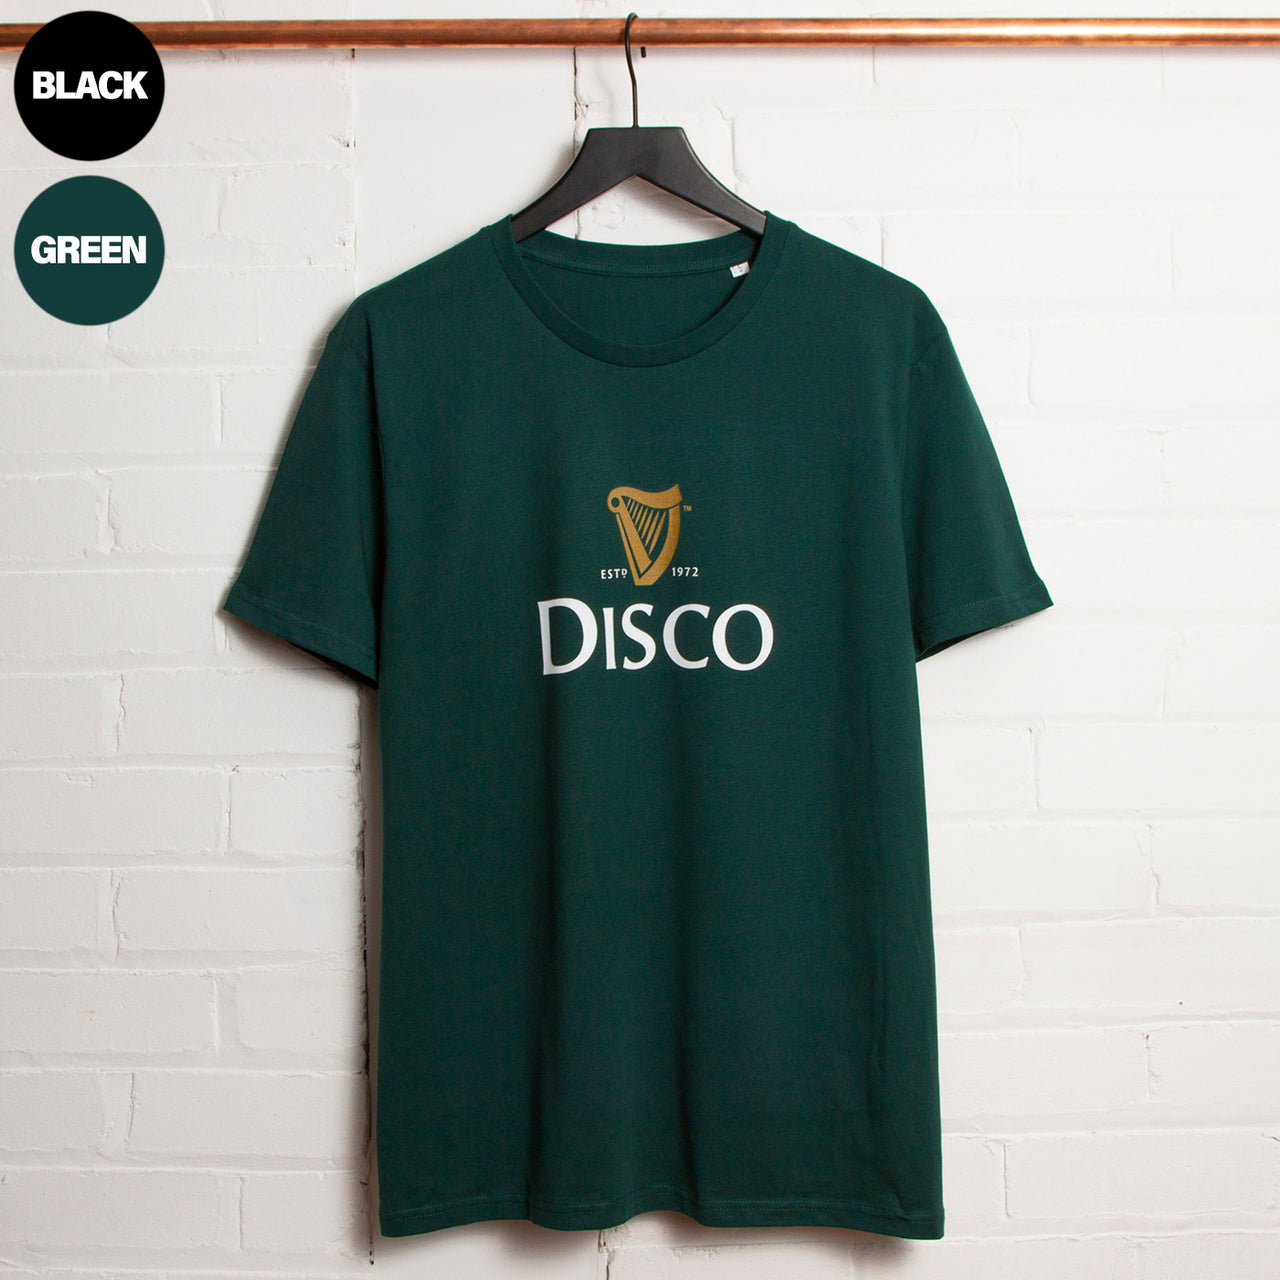 Disco Harp - Tshirt - Black or Green